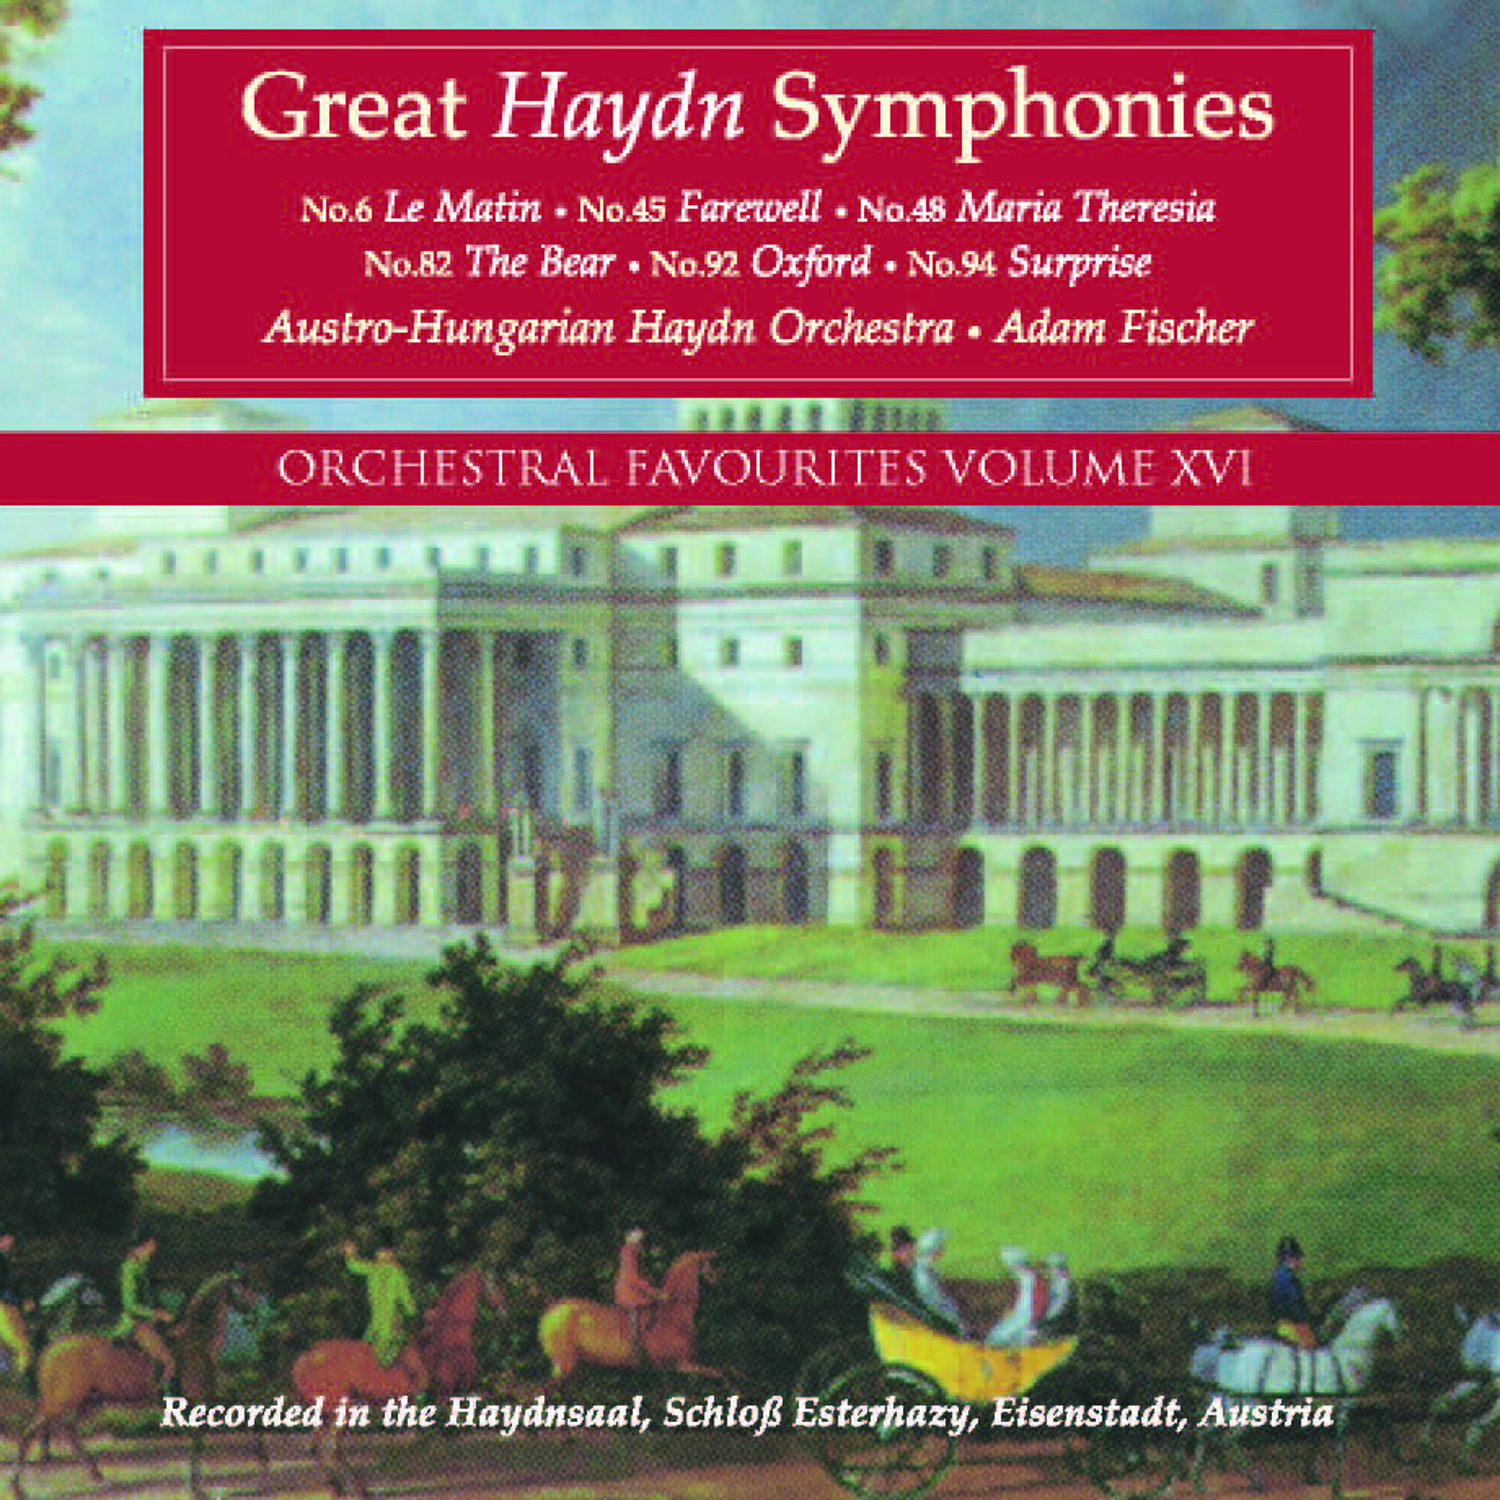 Symphony No. 45 in F-Sharp Minor, Hob.I:45 "Farewell": II. Adagio